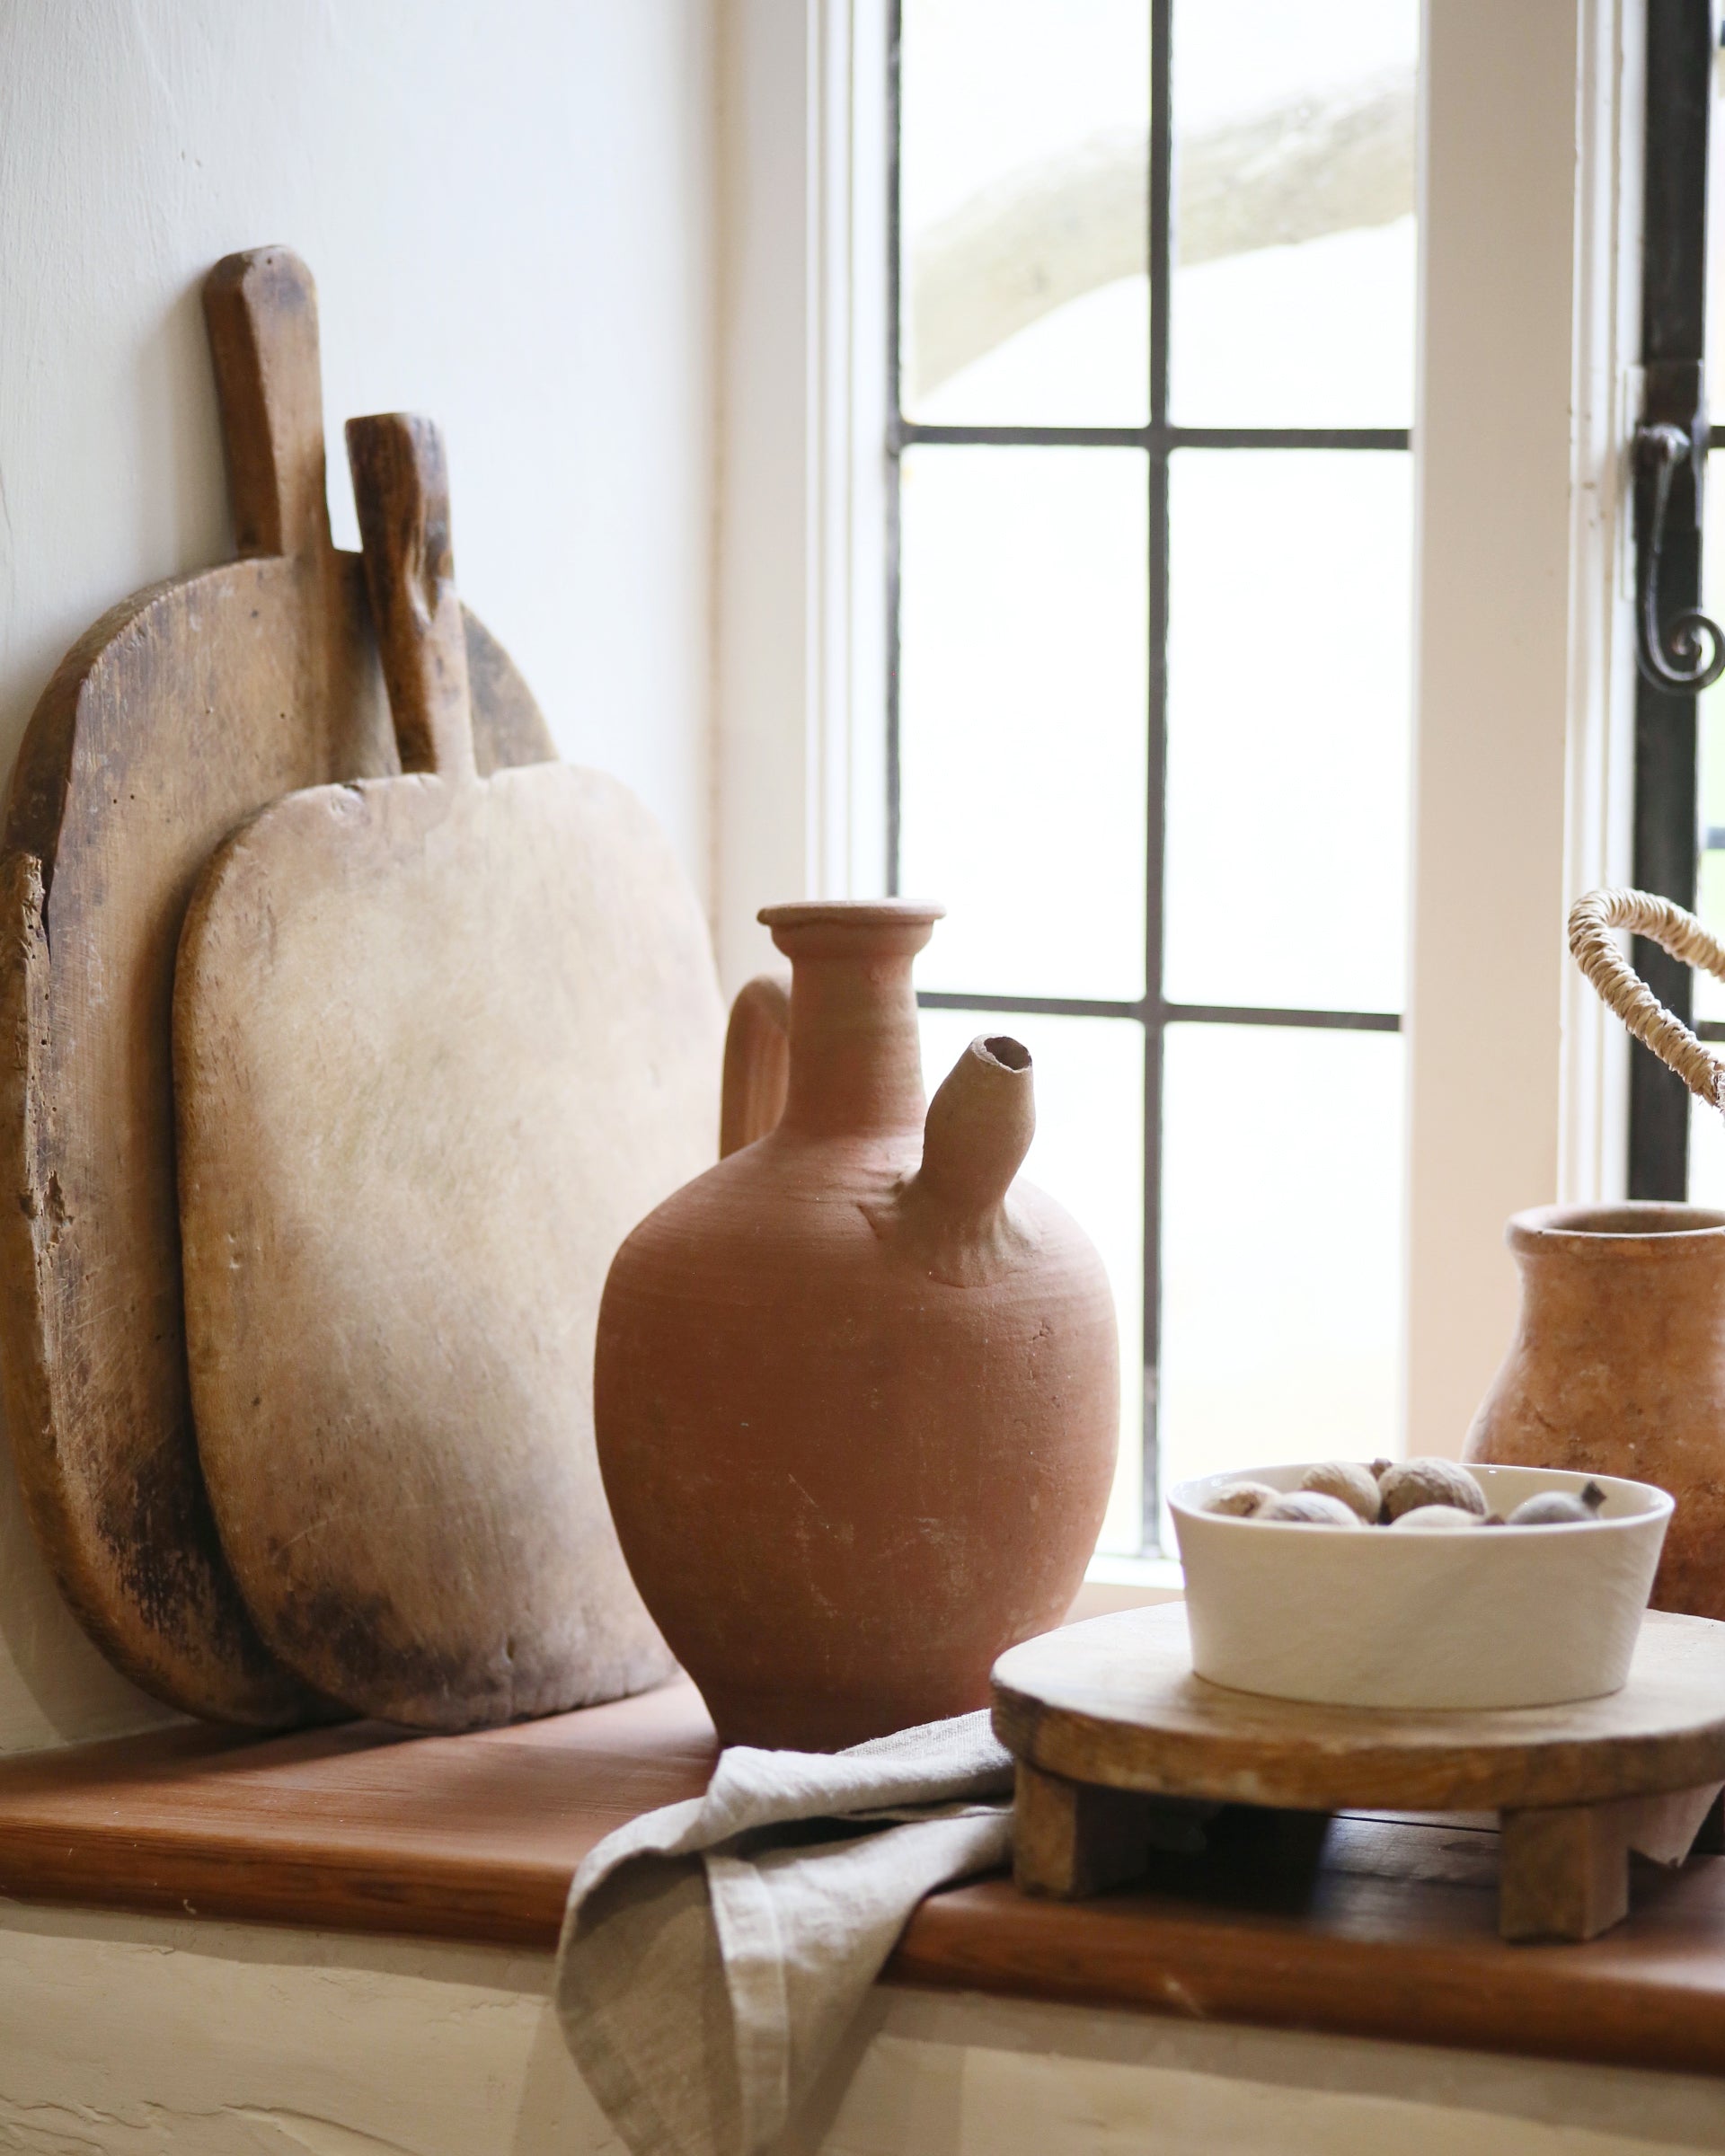 Kitchen window display showing antique terracotta water pitcher jug